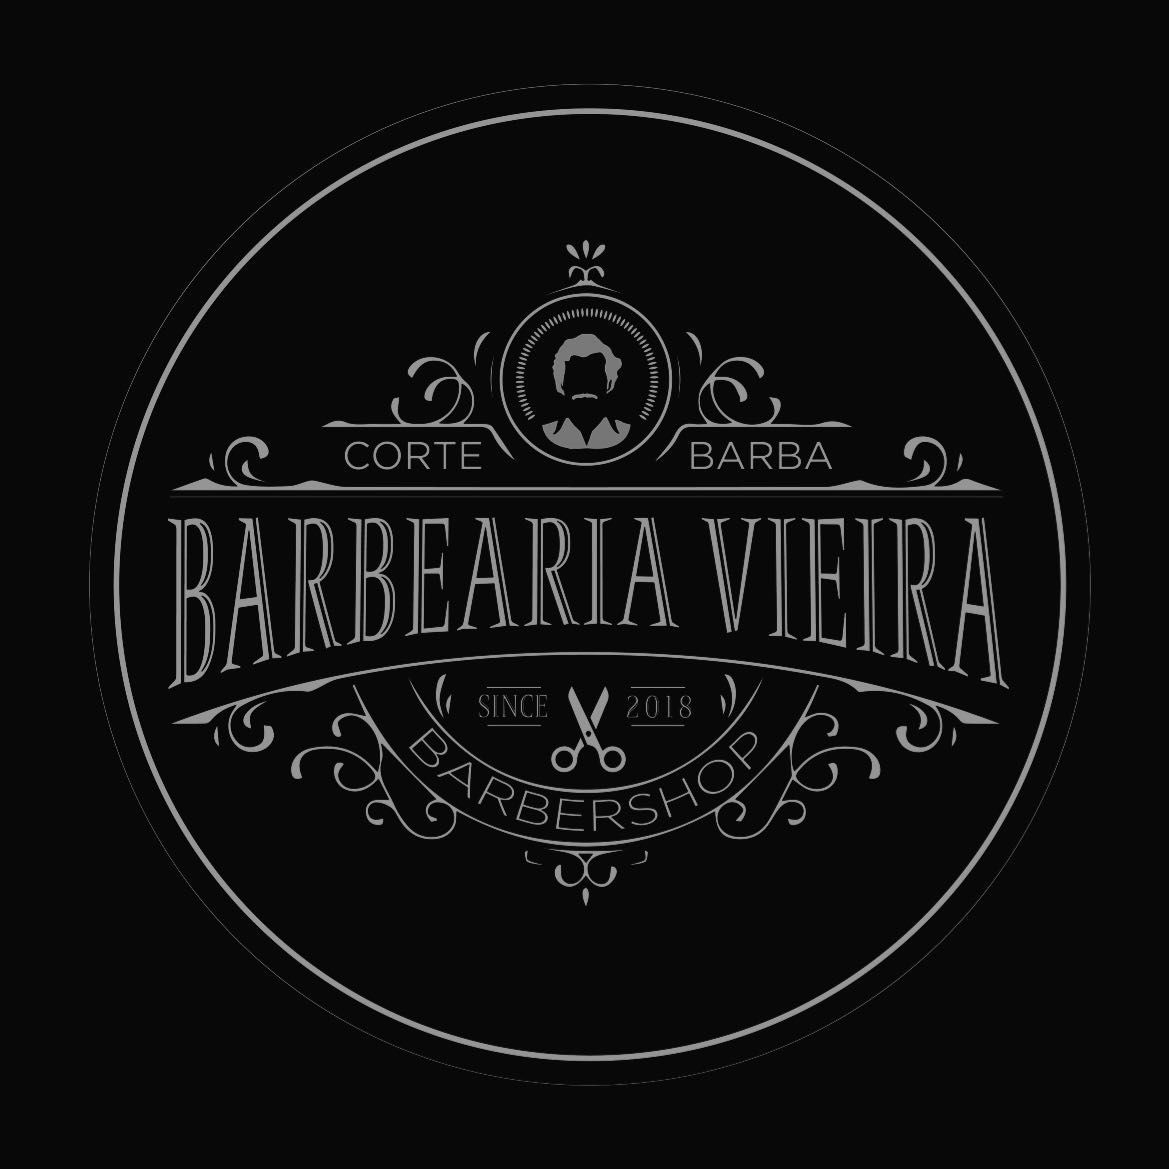 Barbearia vieira, Rua Elza, 128, 07097-370, Guarulhos